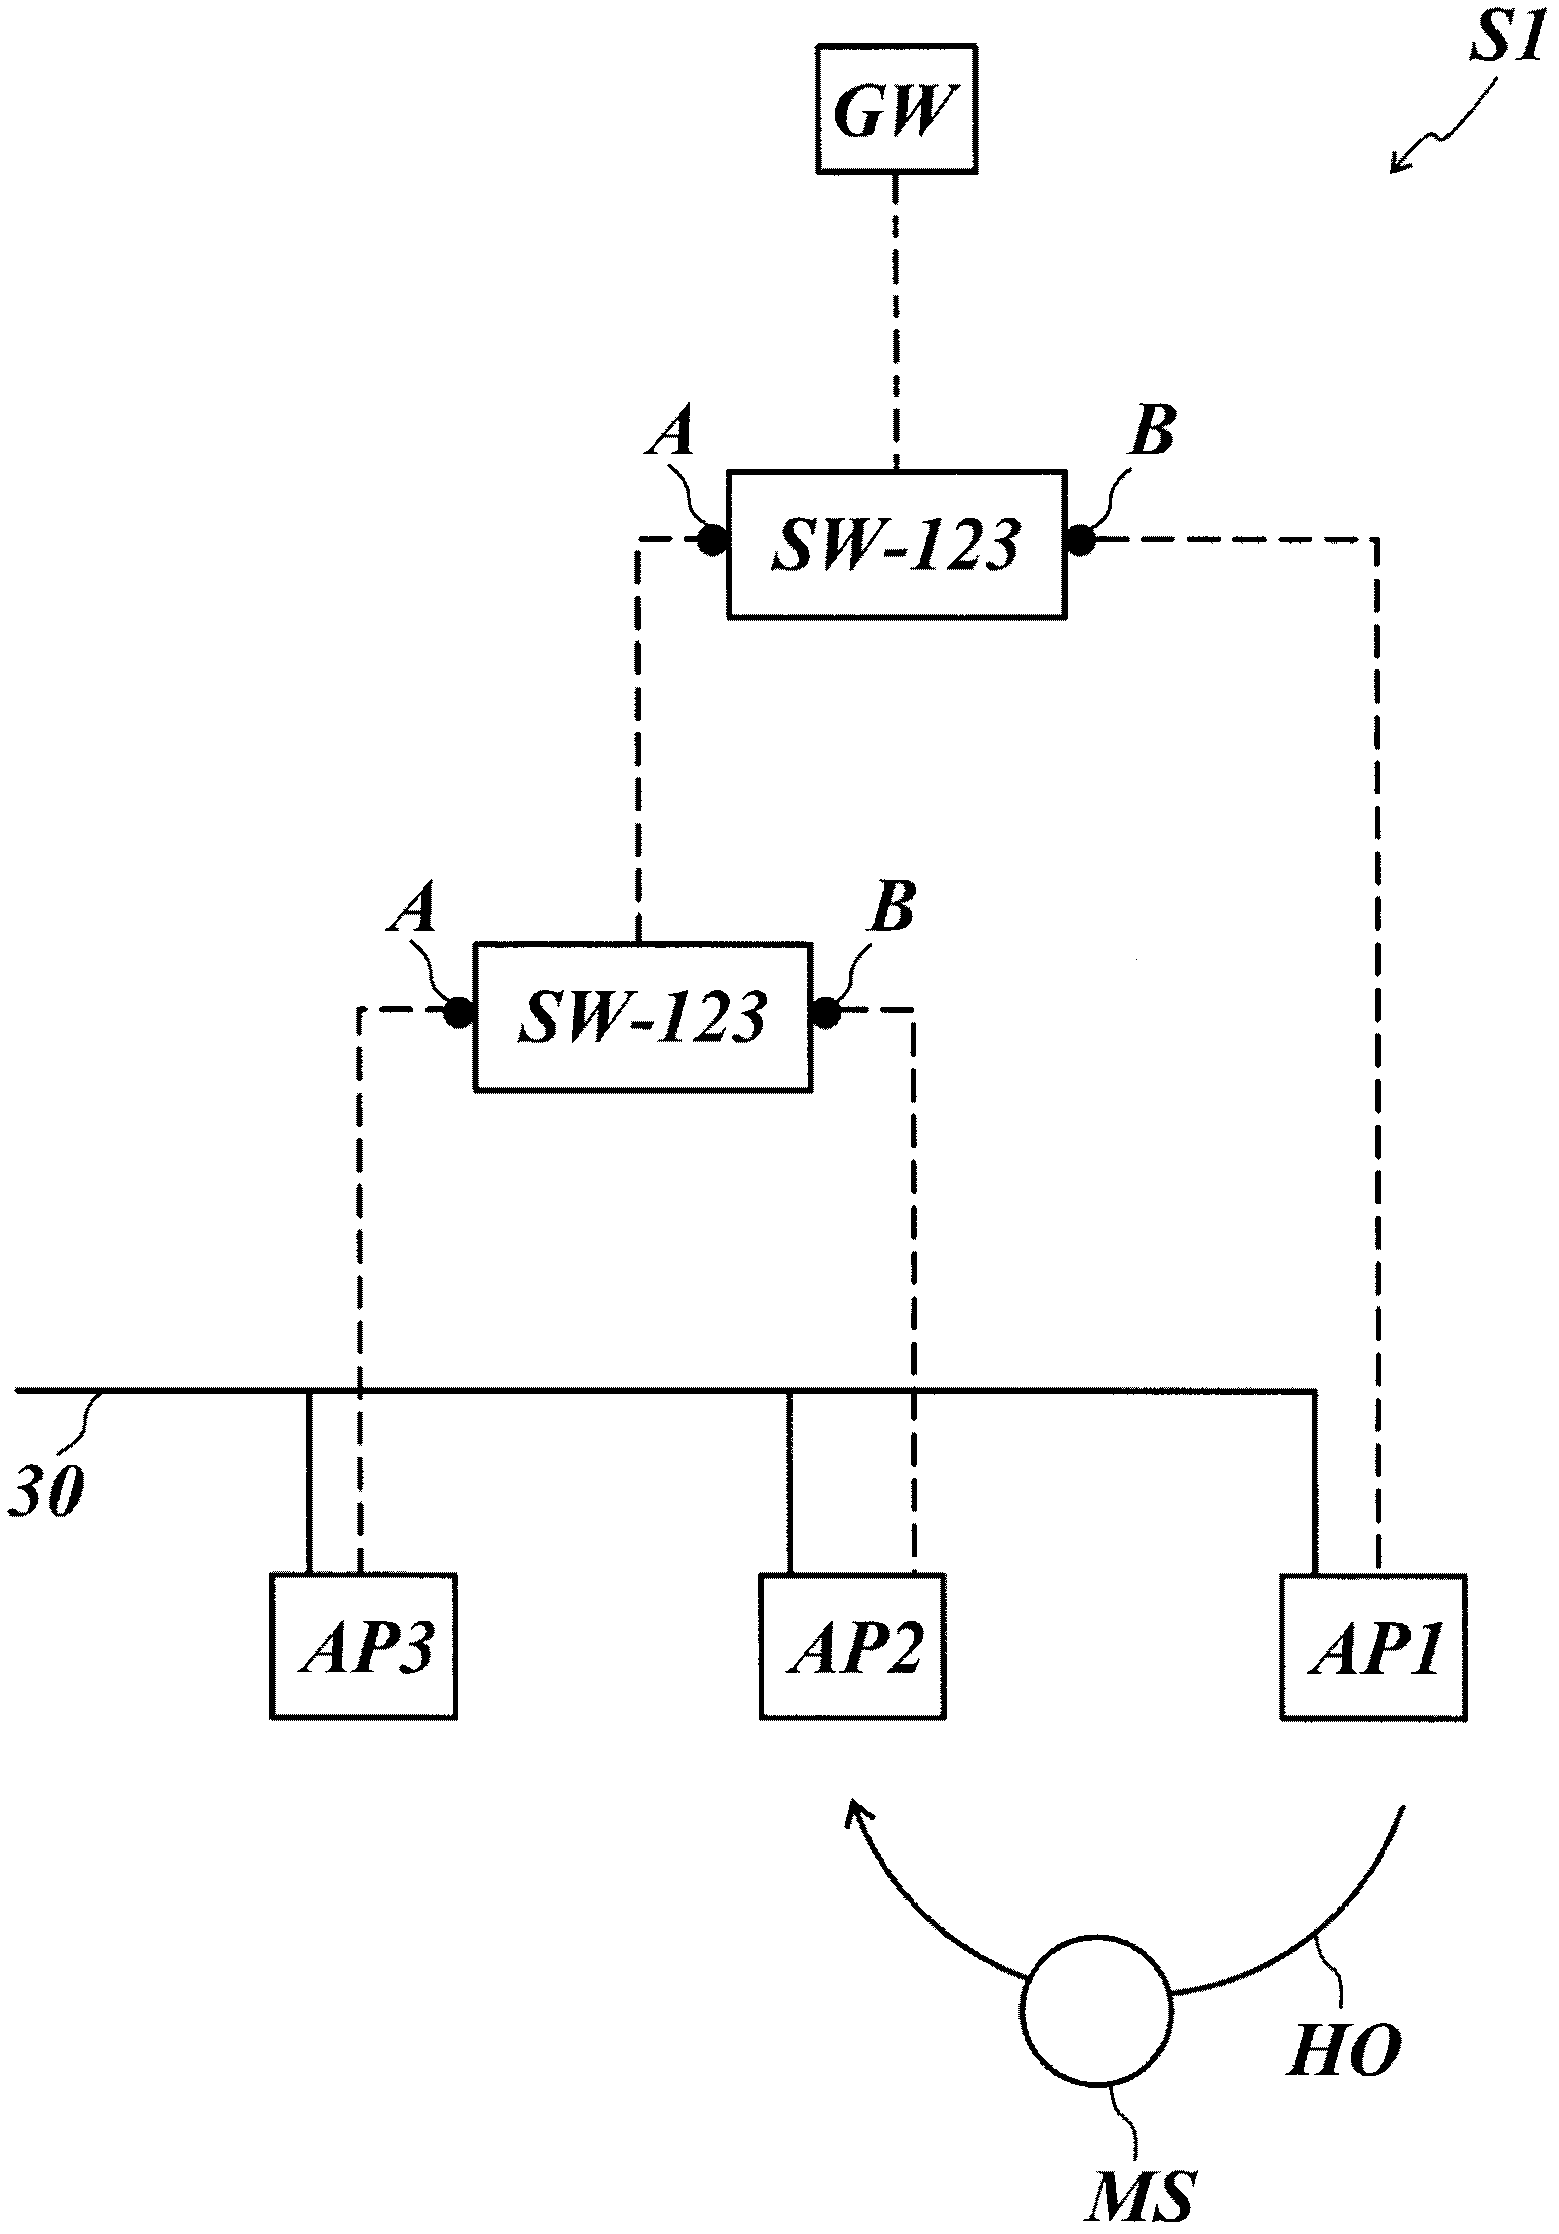 Method of performing an intra-segment handover